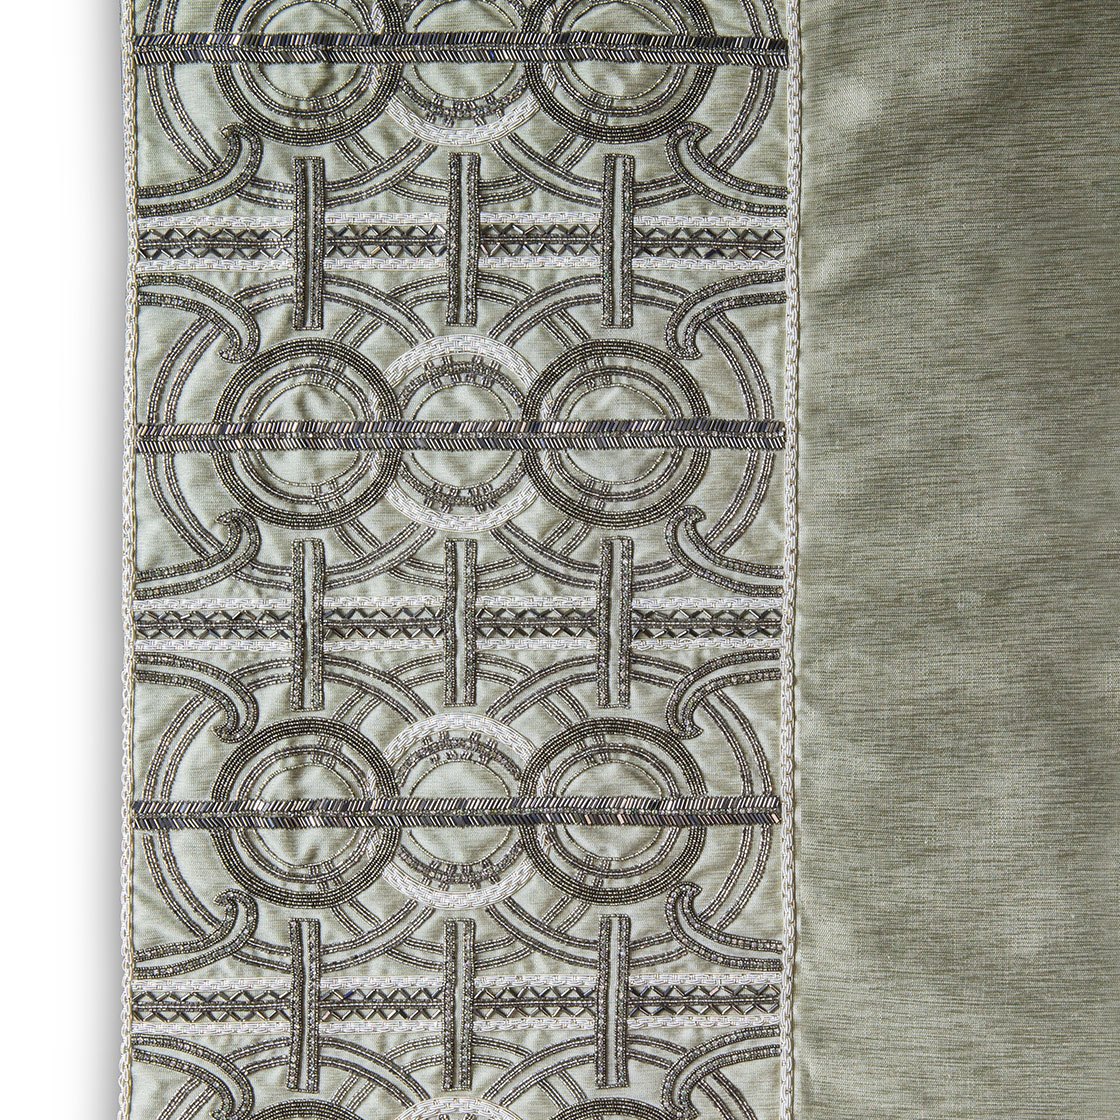 Circe embroidery in Lagan silk - Manhattan - Beaumont & Fletcher